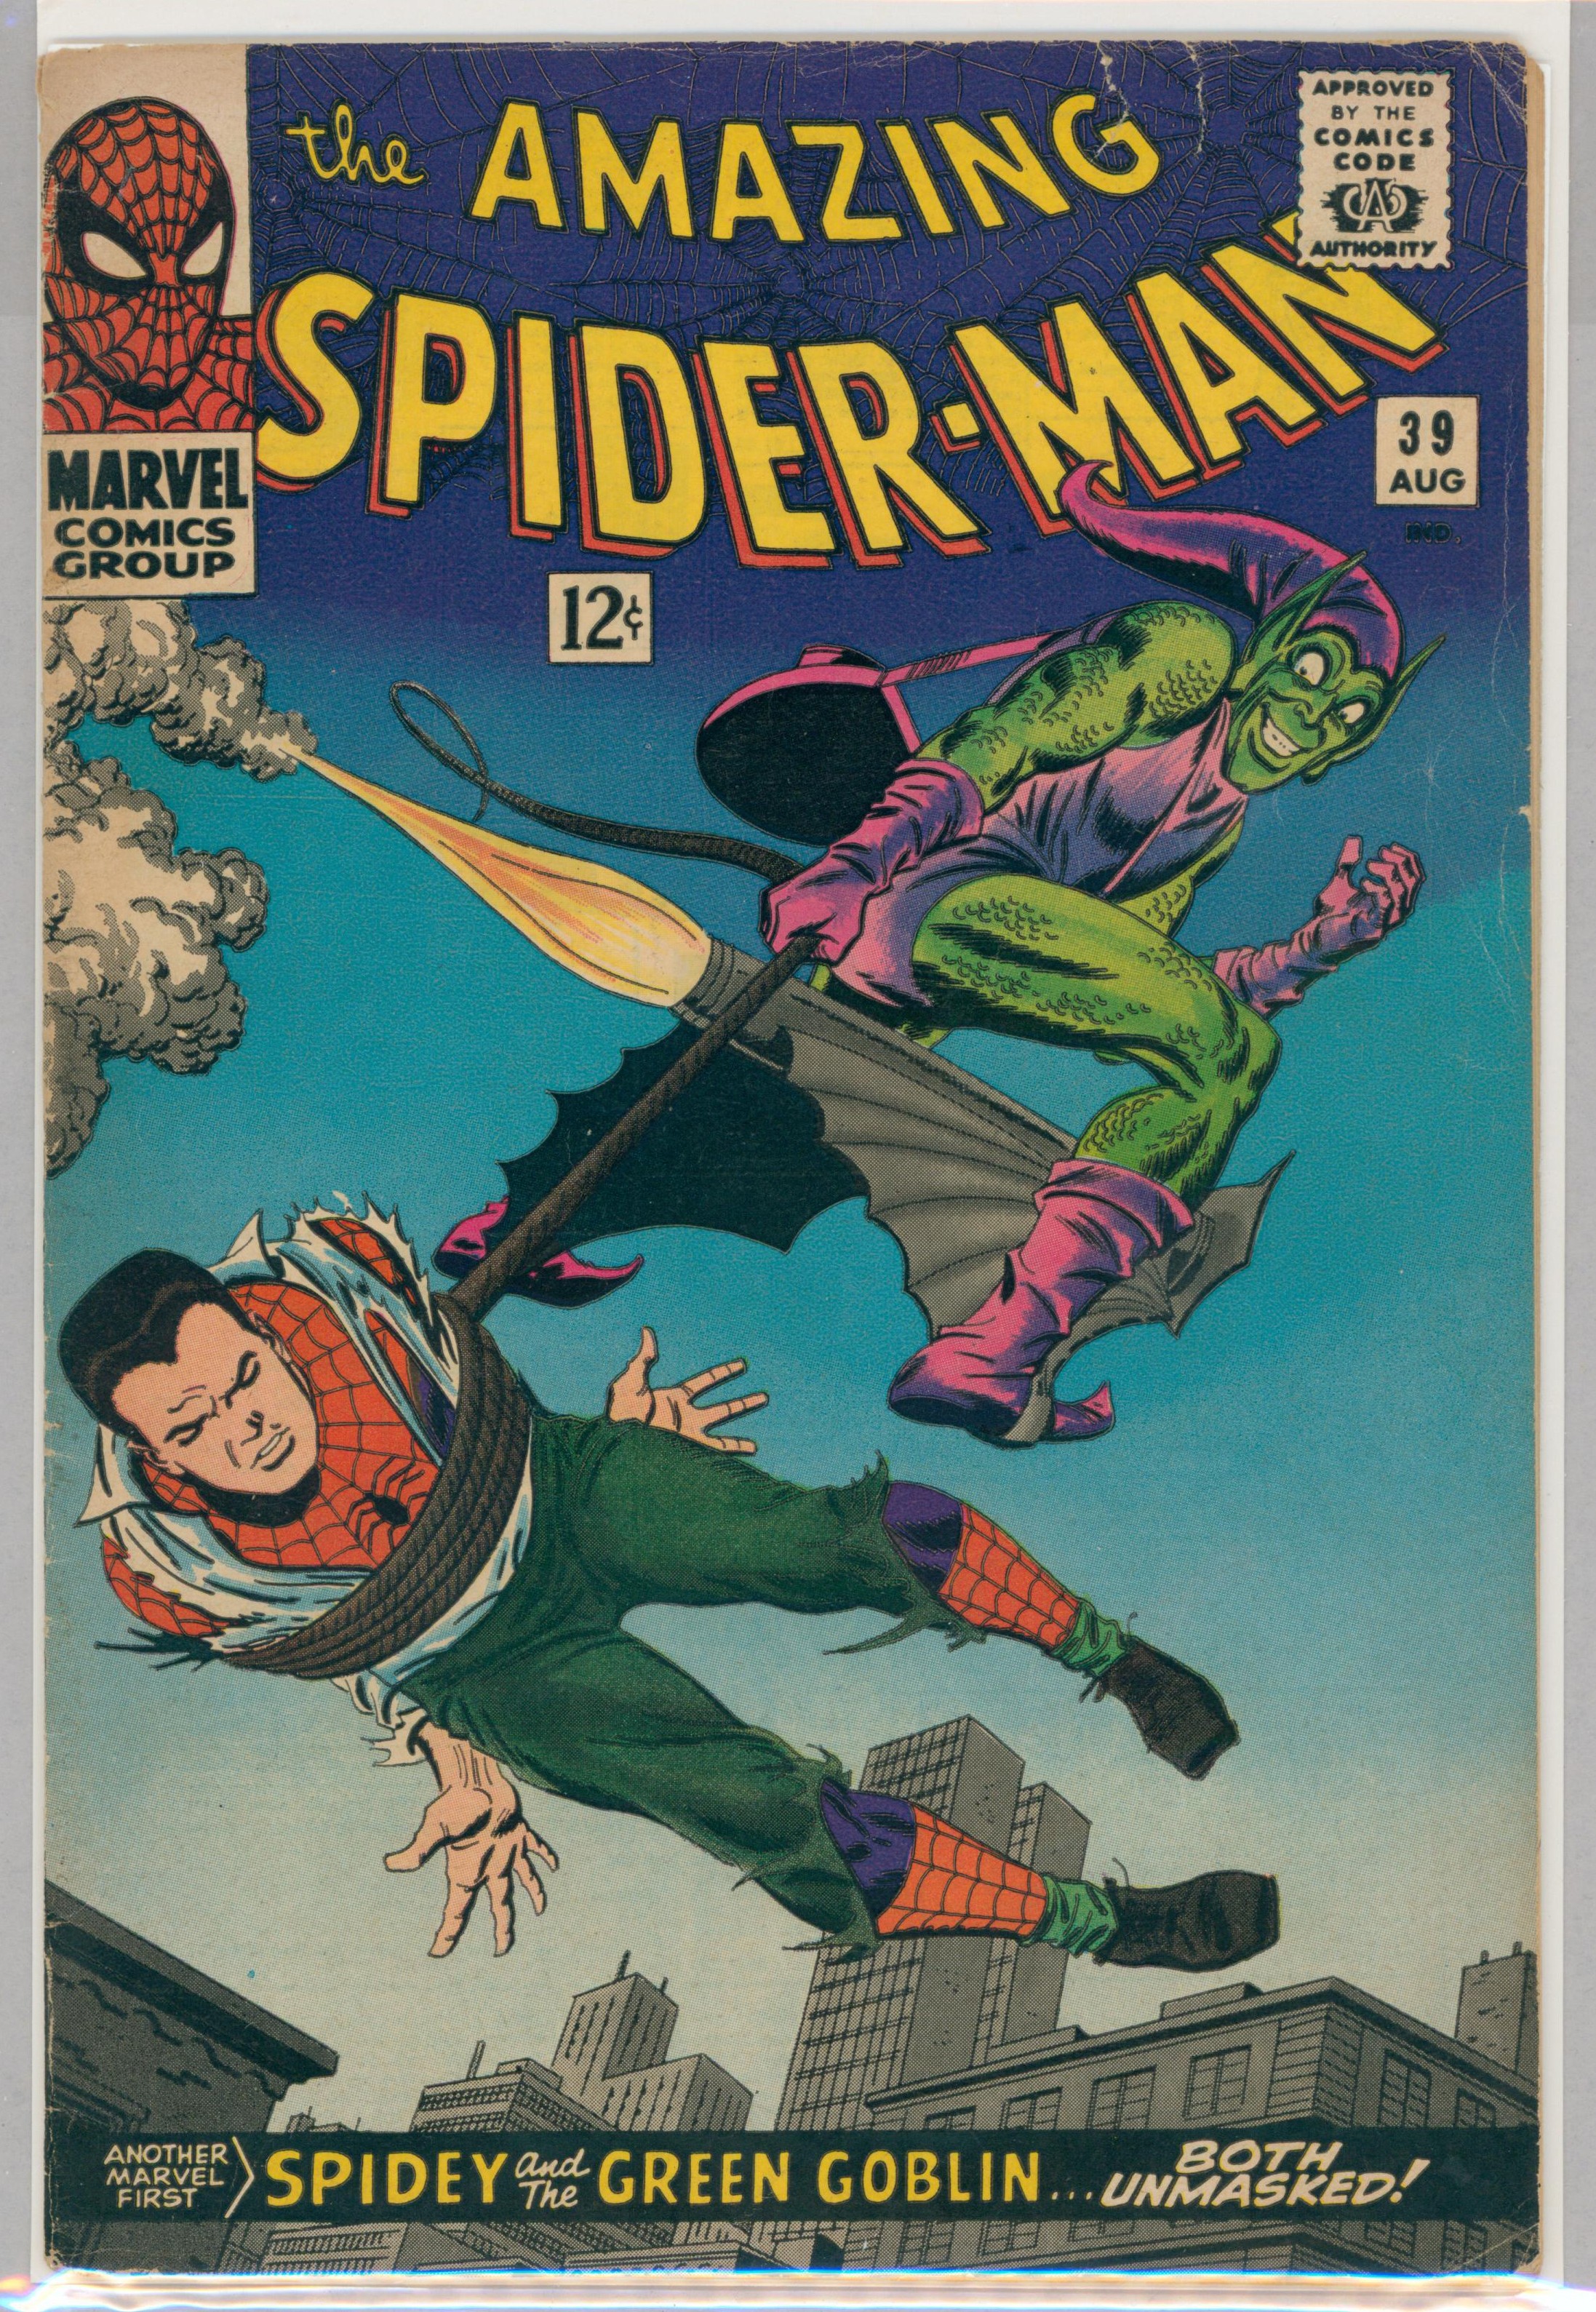 THE AMAZING SPIDER-MAN #39 (Aug 1966, Marvel) – Key Issue: First John Romita Artwork; Norman